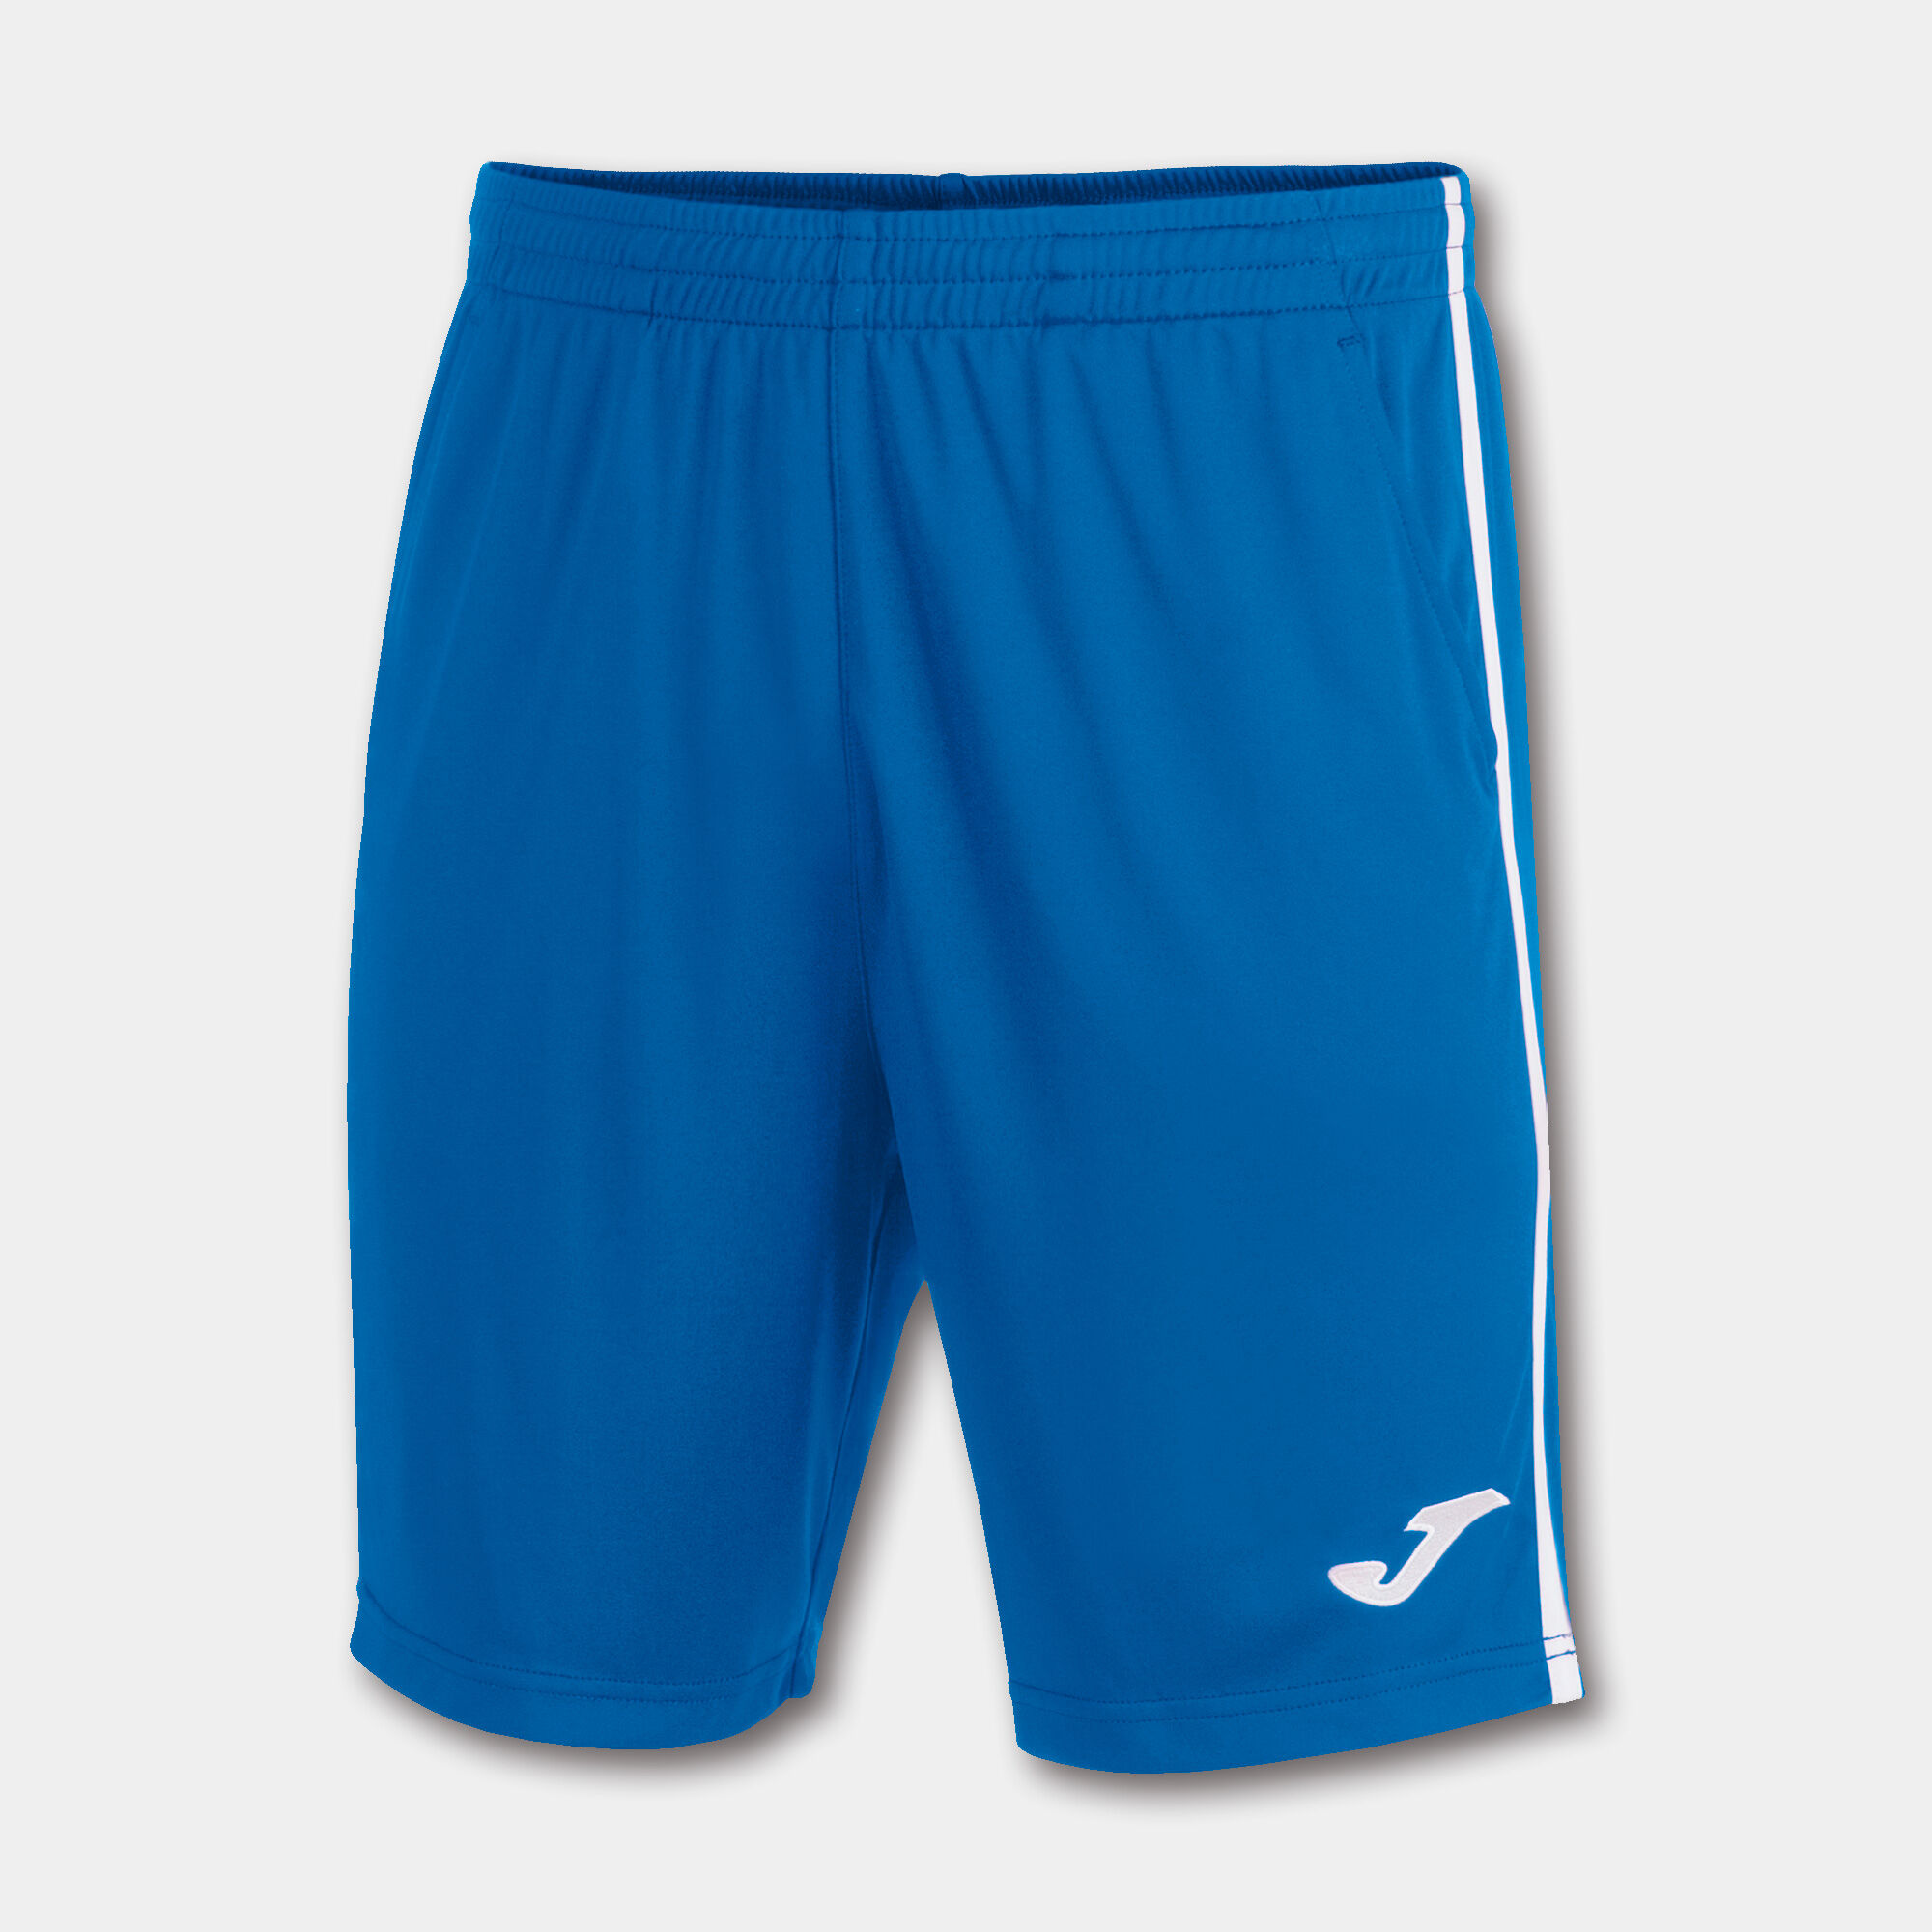 Bermuda shorts man Open III royal blue white